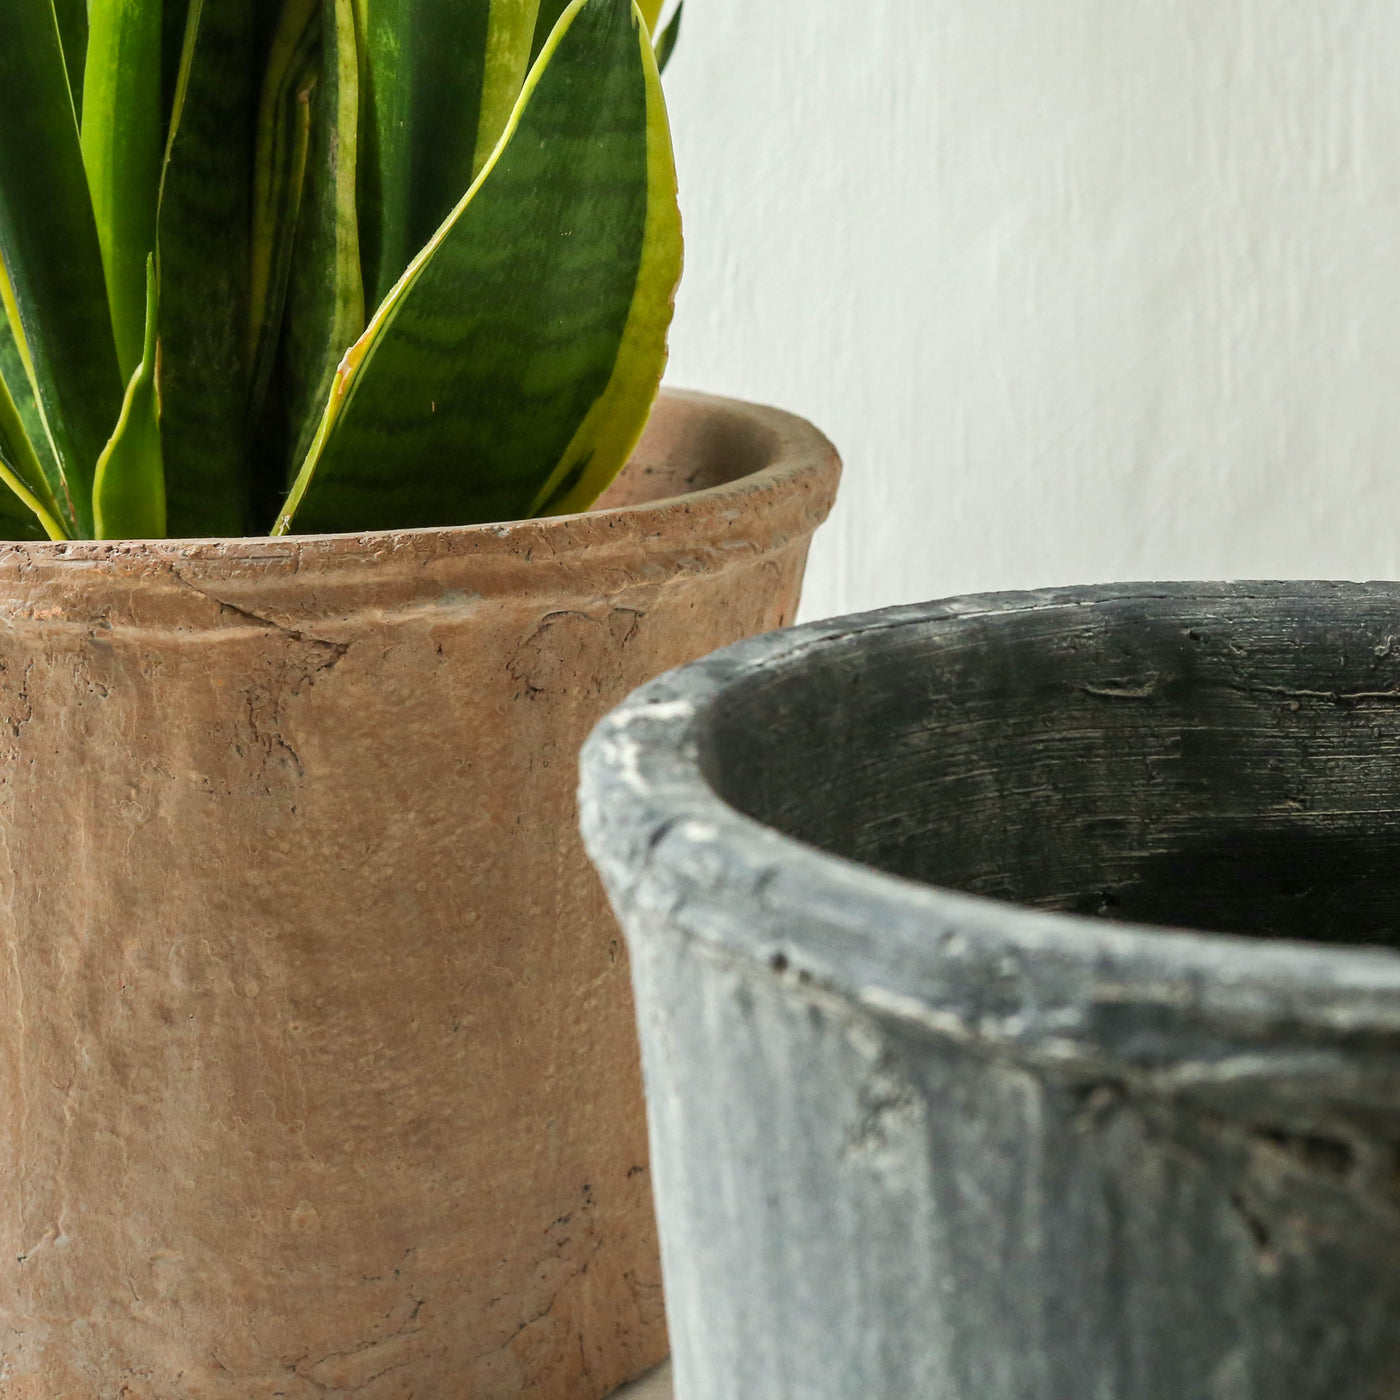 Rustic Terracotta Plant Pot - Extra Large